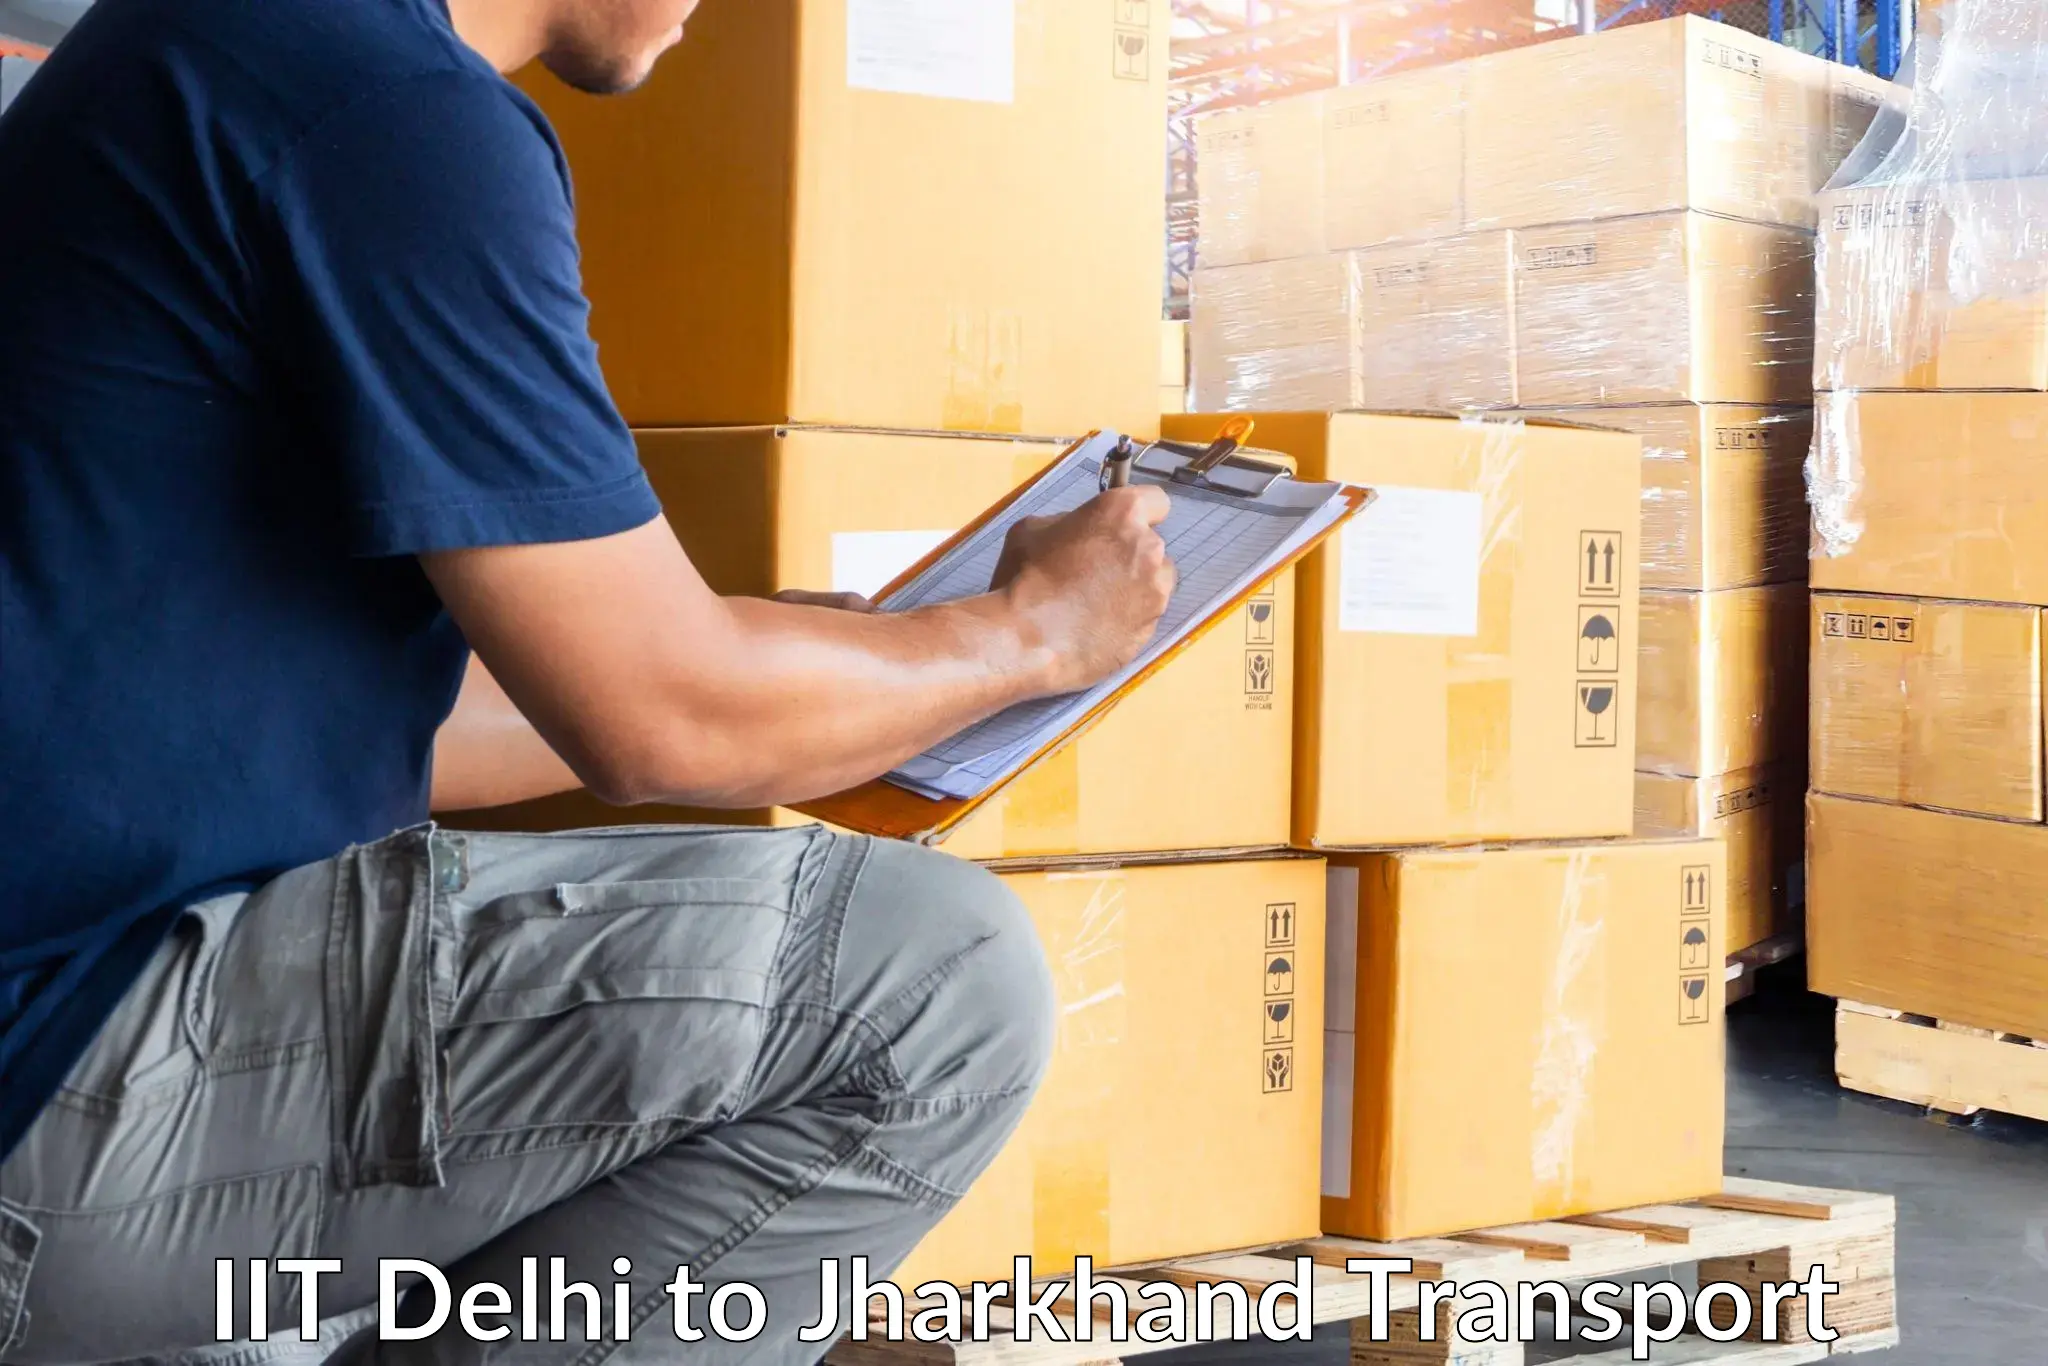 Delivery service IIT Delhi to Dhalbhumgarh